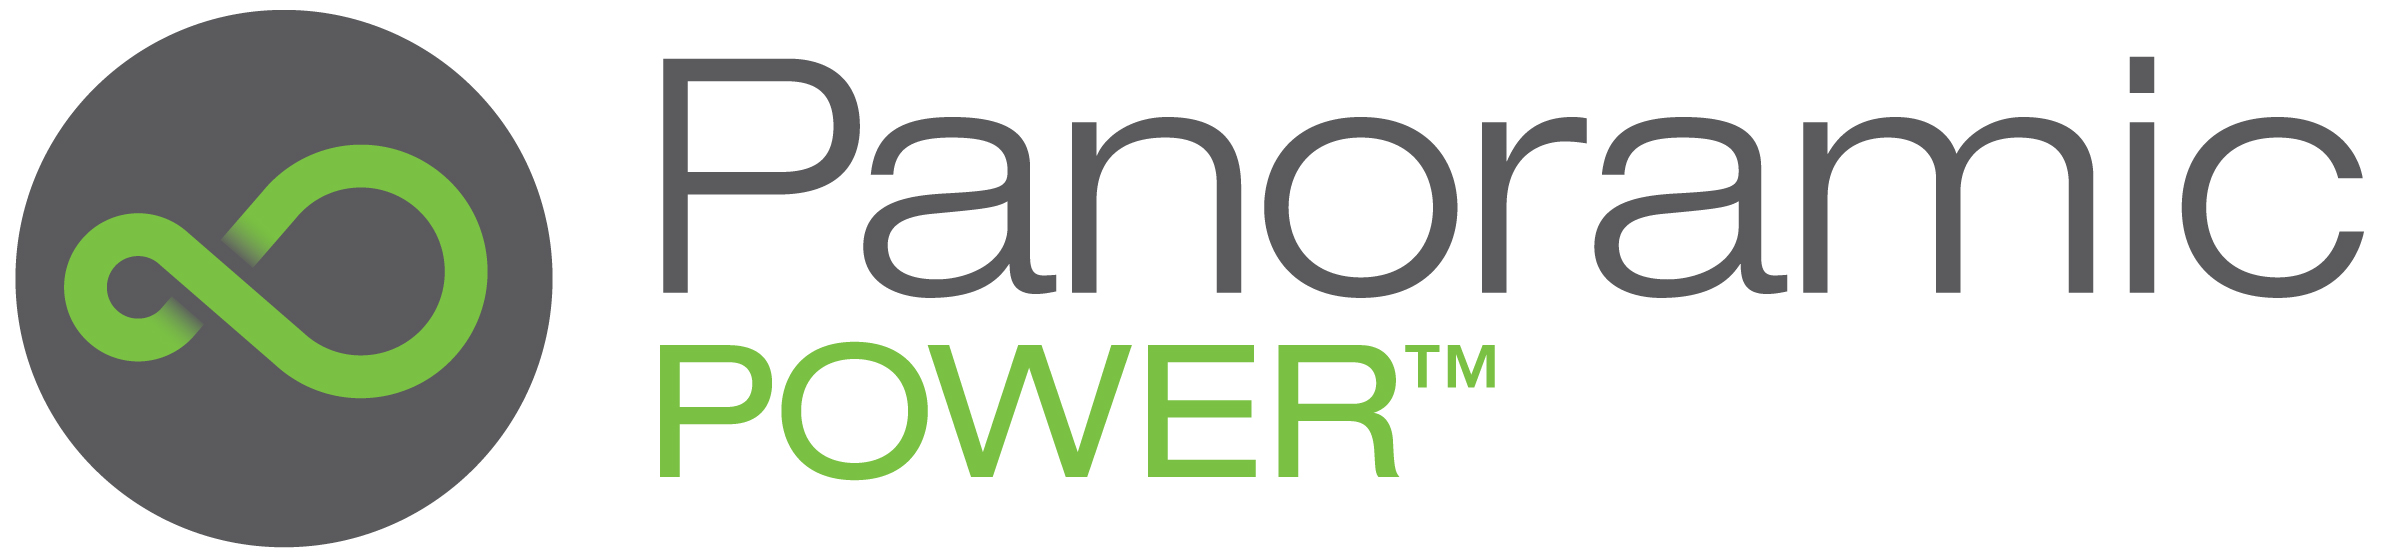 Panoramic Power logo